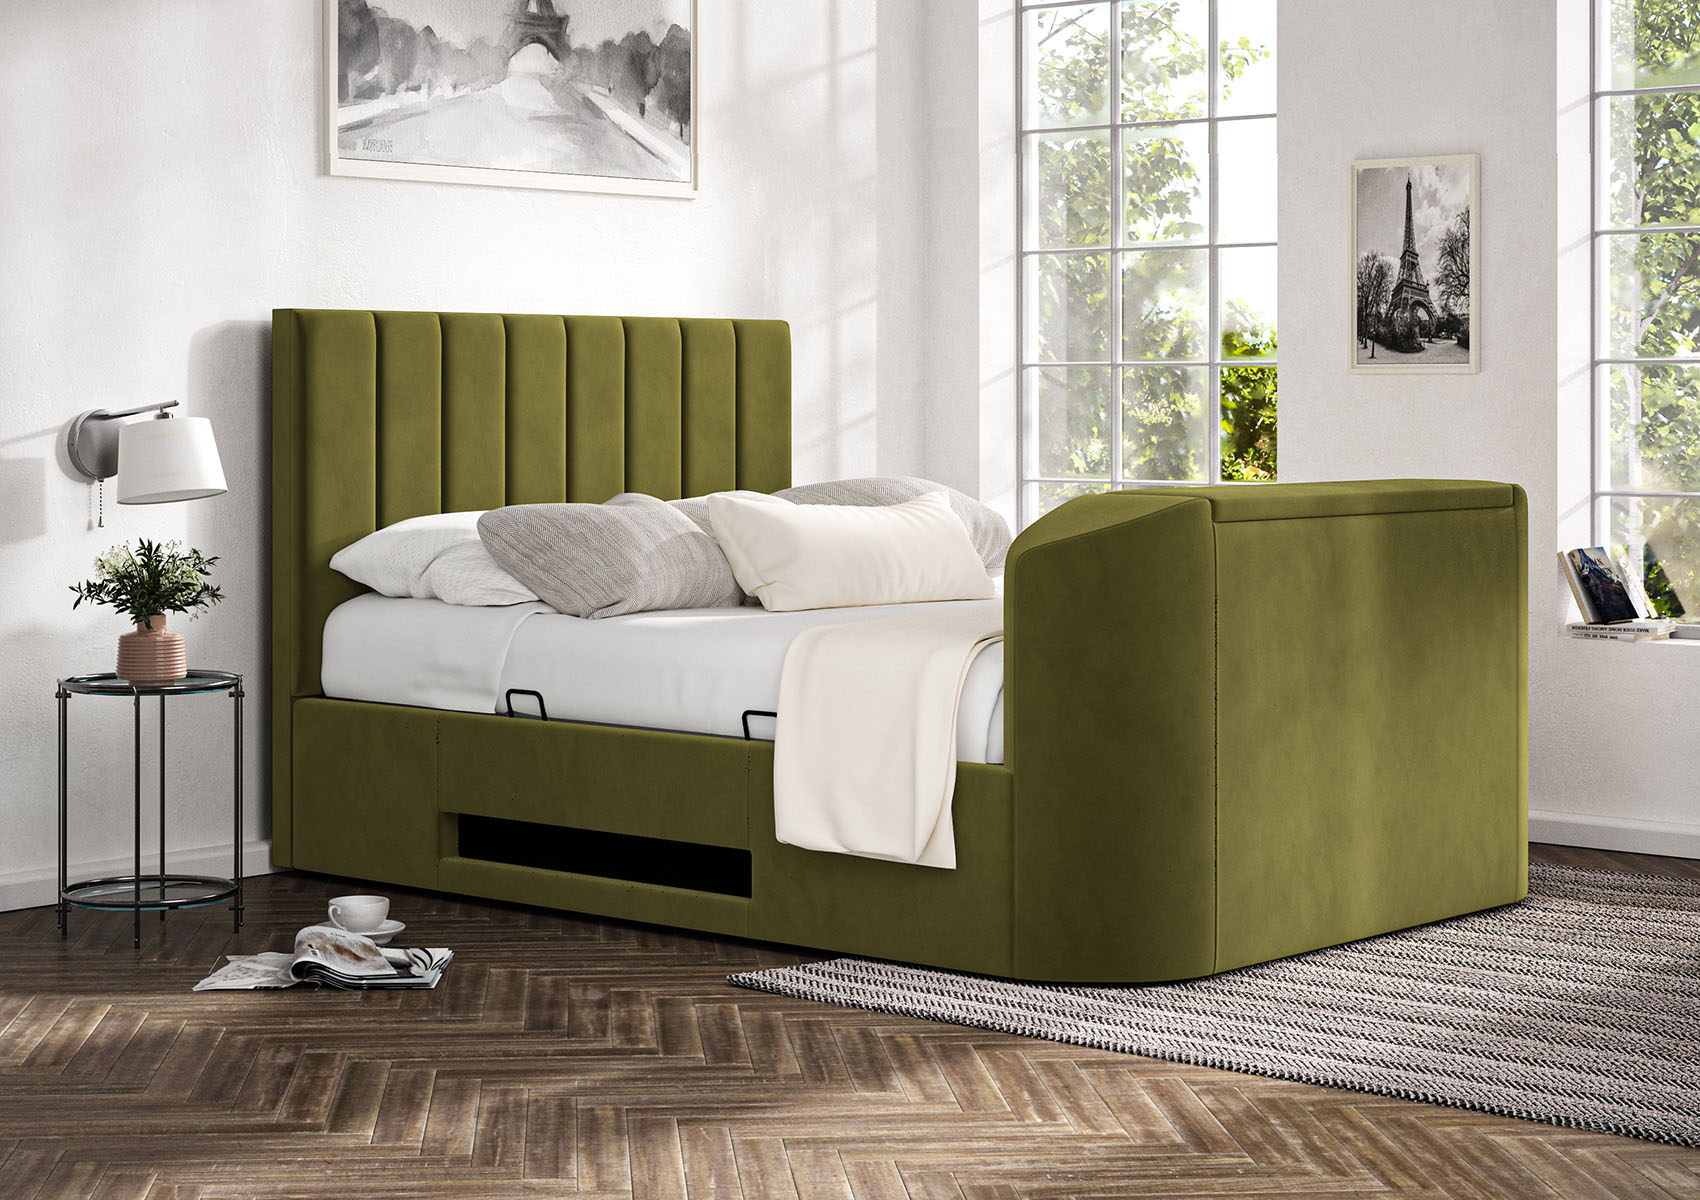 View Berkley Upholstered Hugo Olive Multifunctional Ottoman Smart TV Bed Bed Frame Only Time4Sleep information